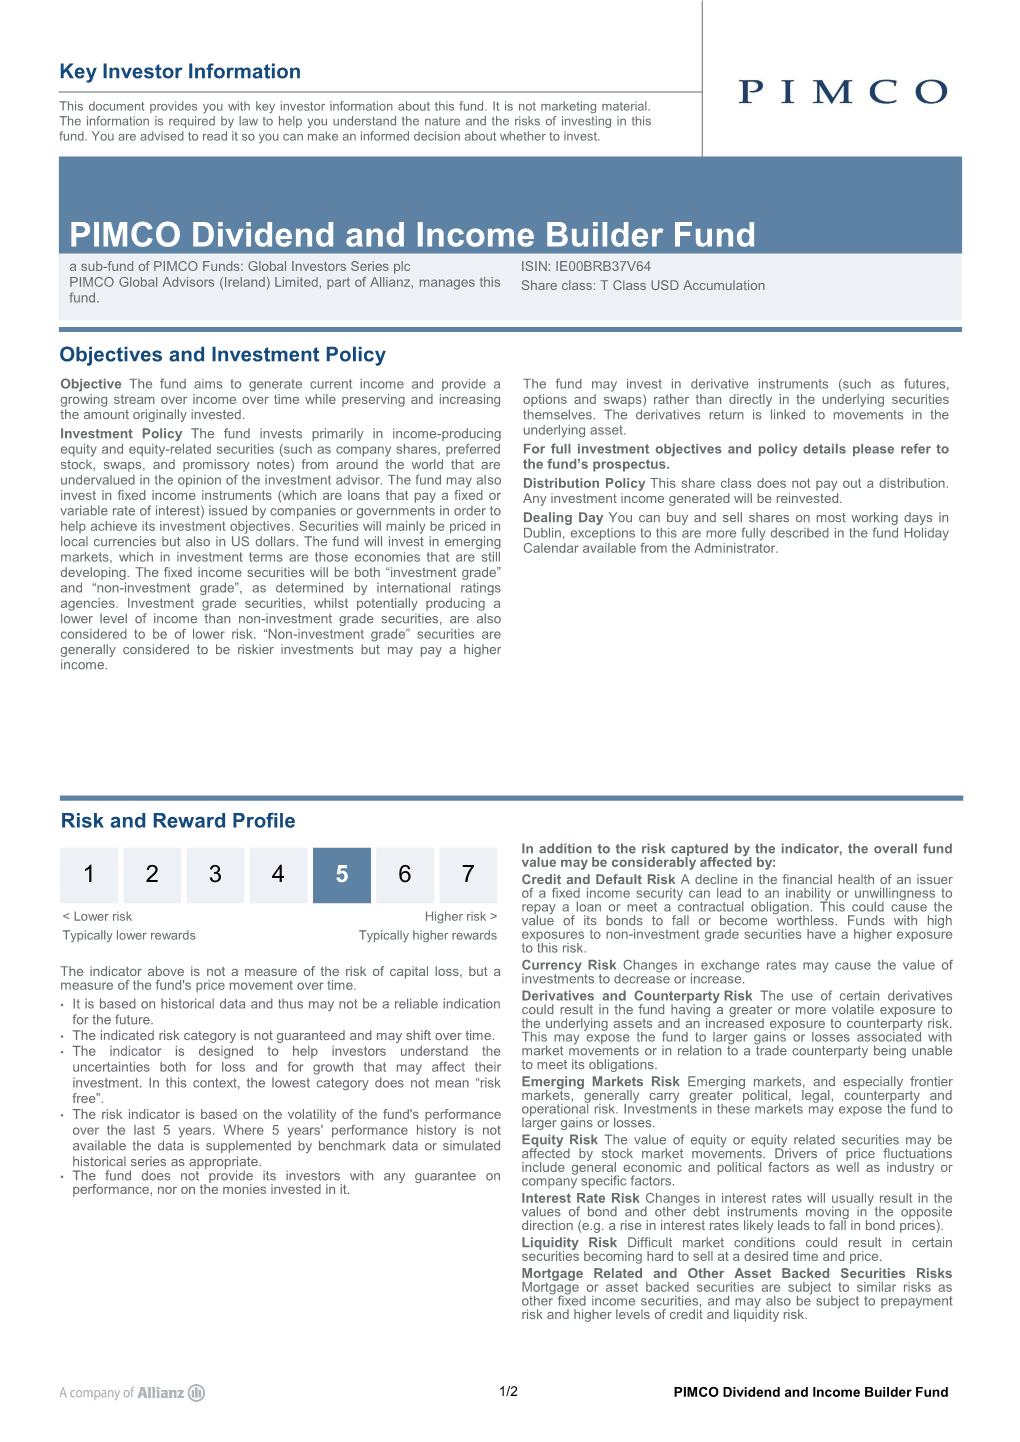 PIMCO Dividend and Income Builder Fund